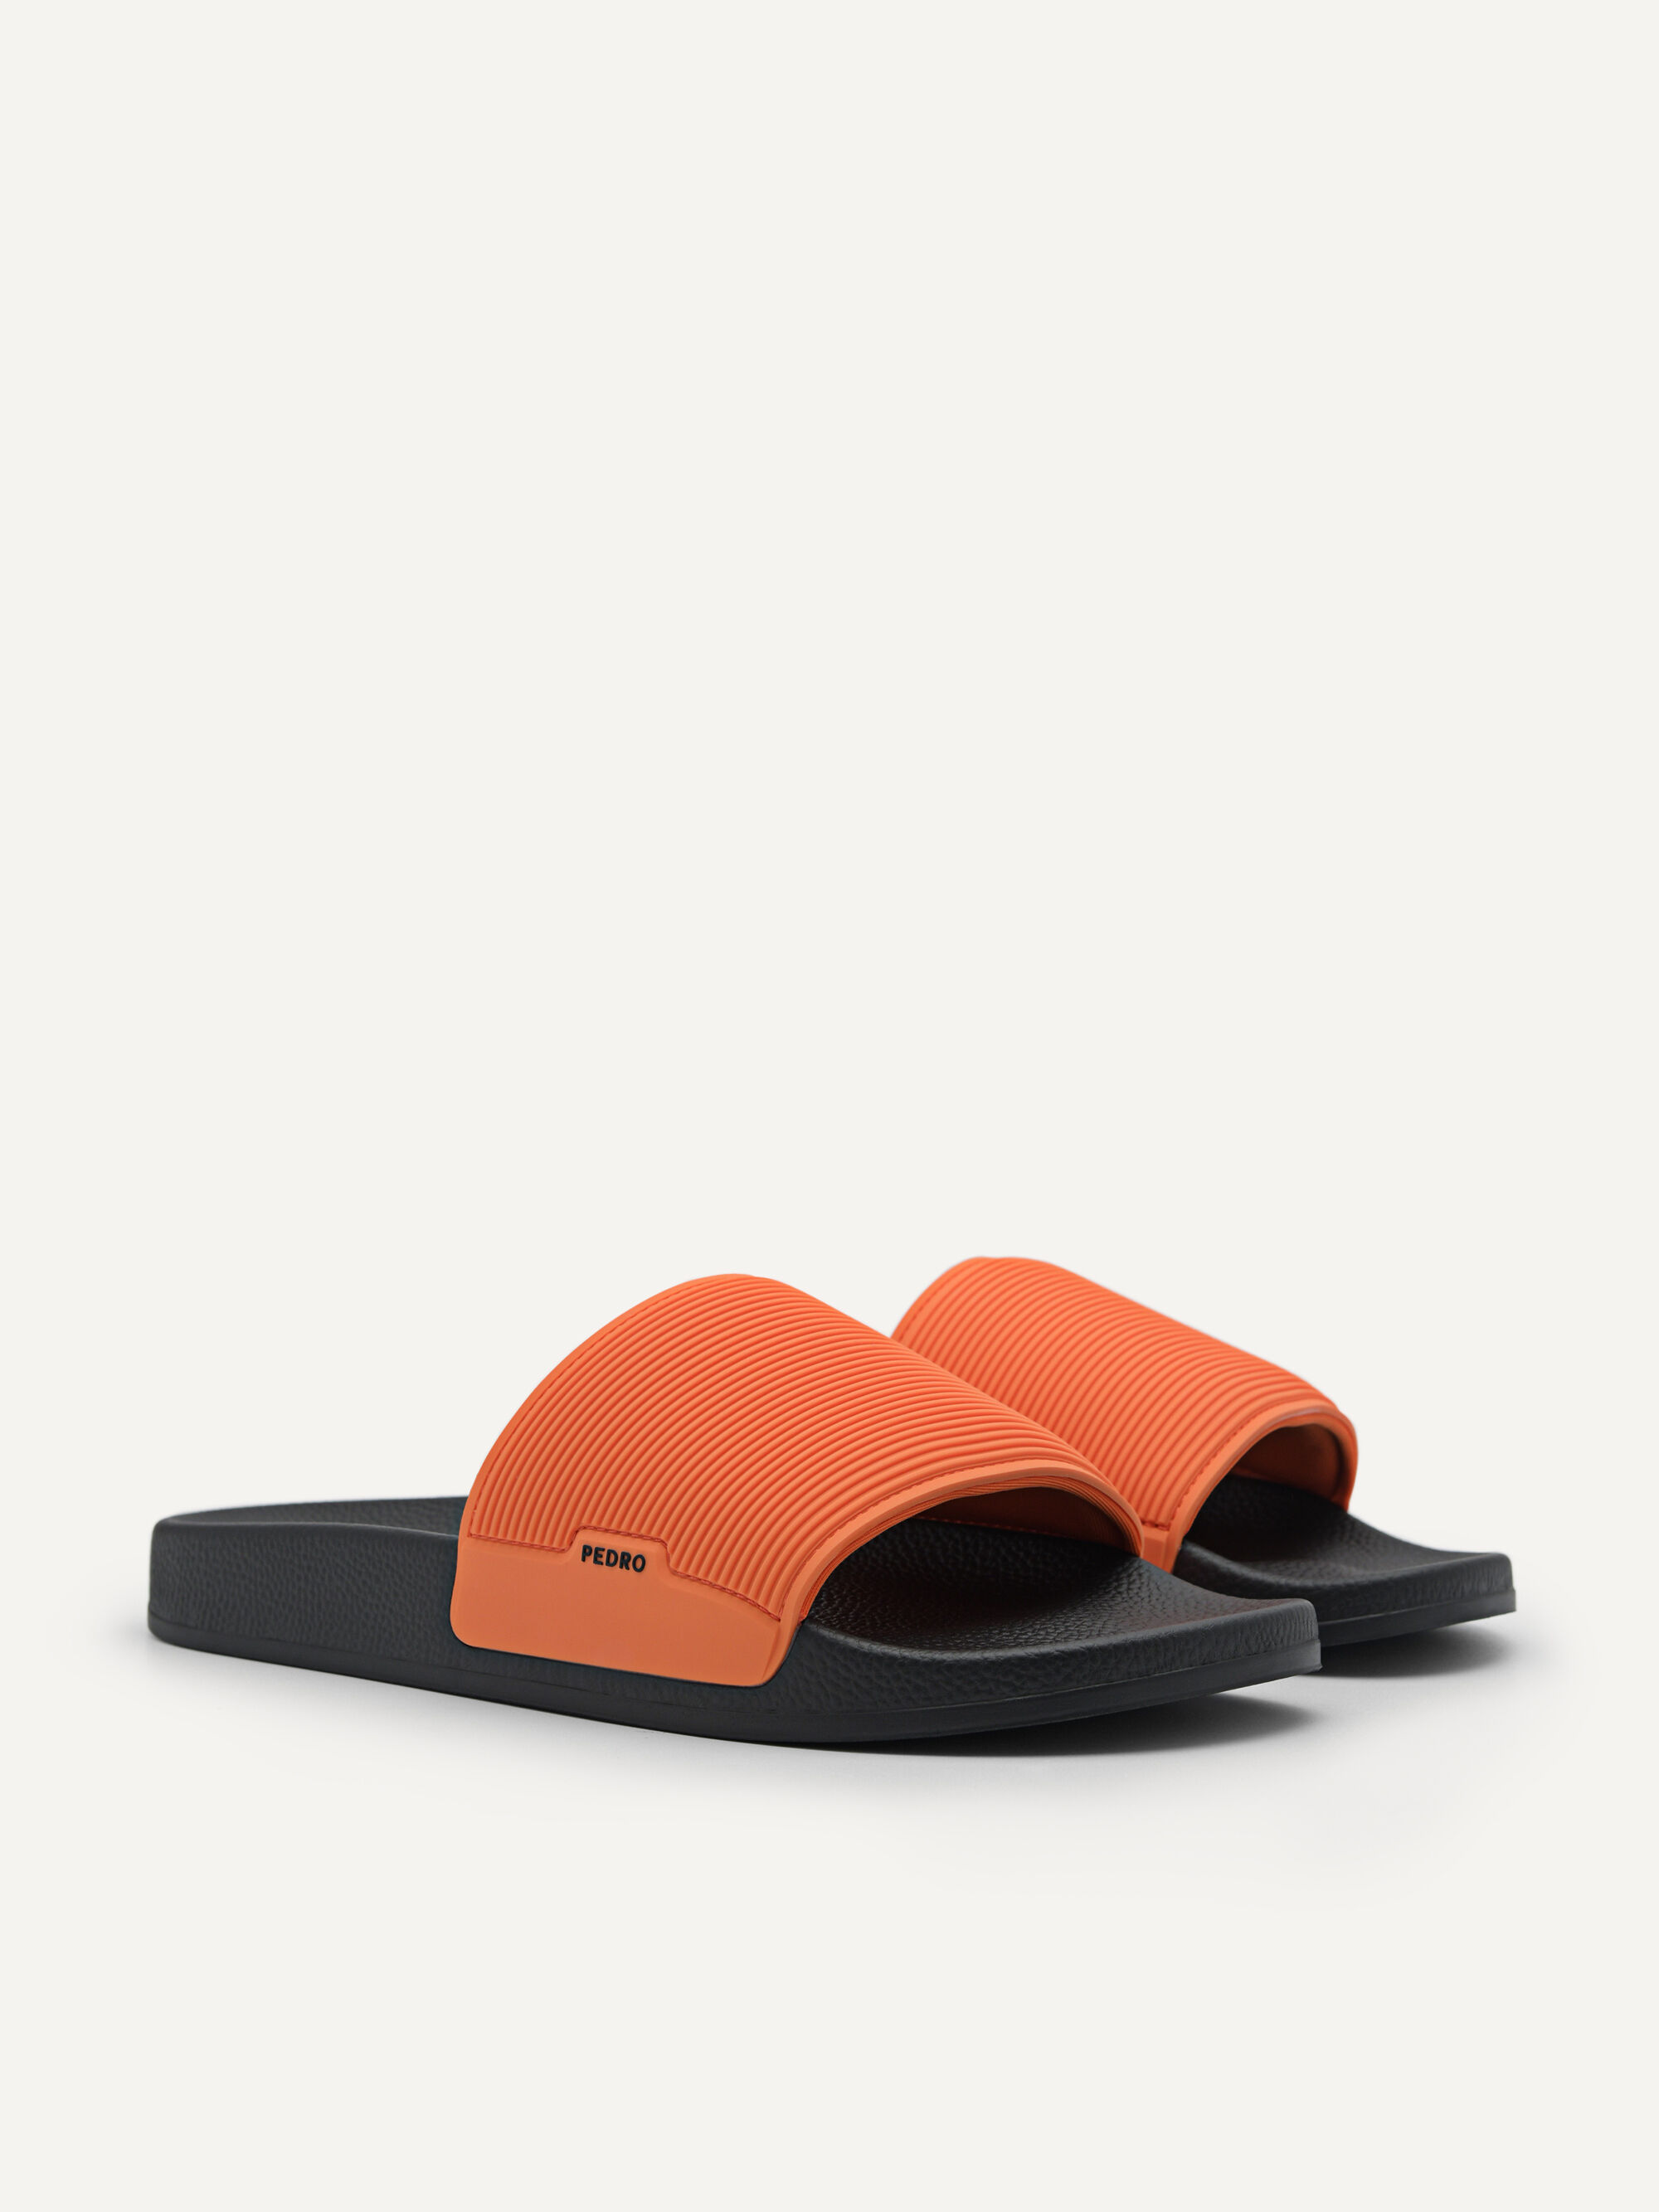 Orange Slide Sandals - PEDRO International